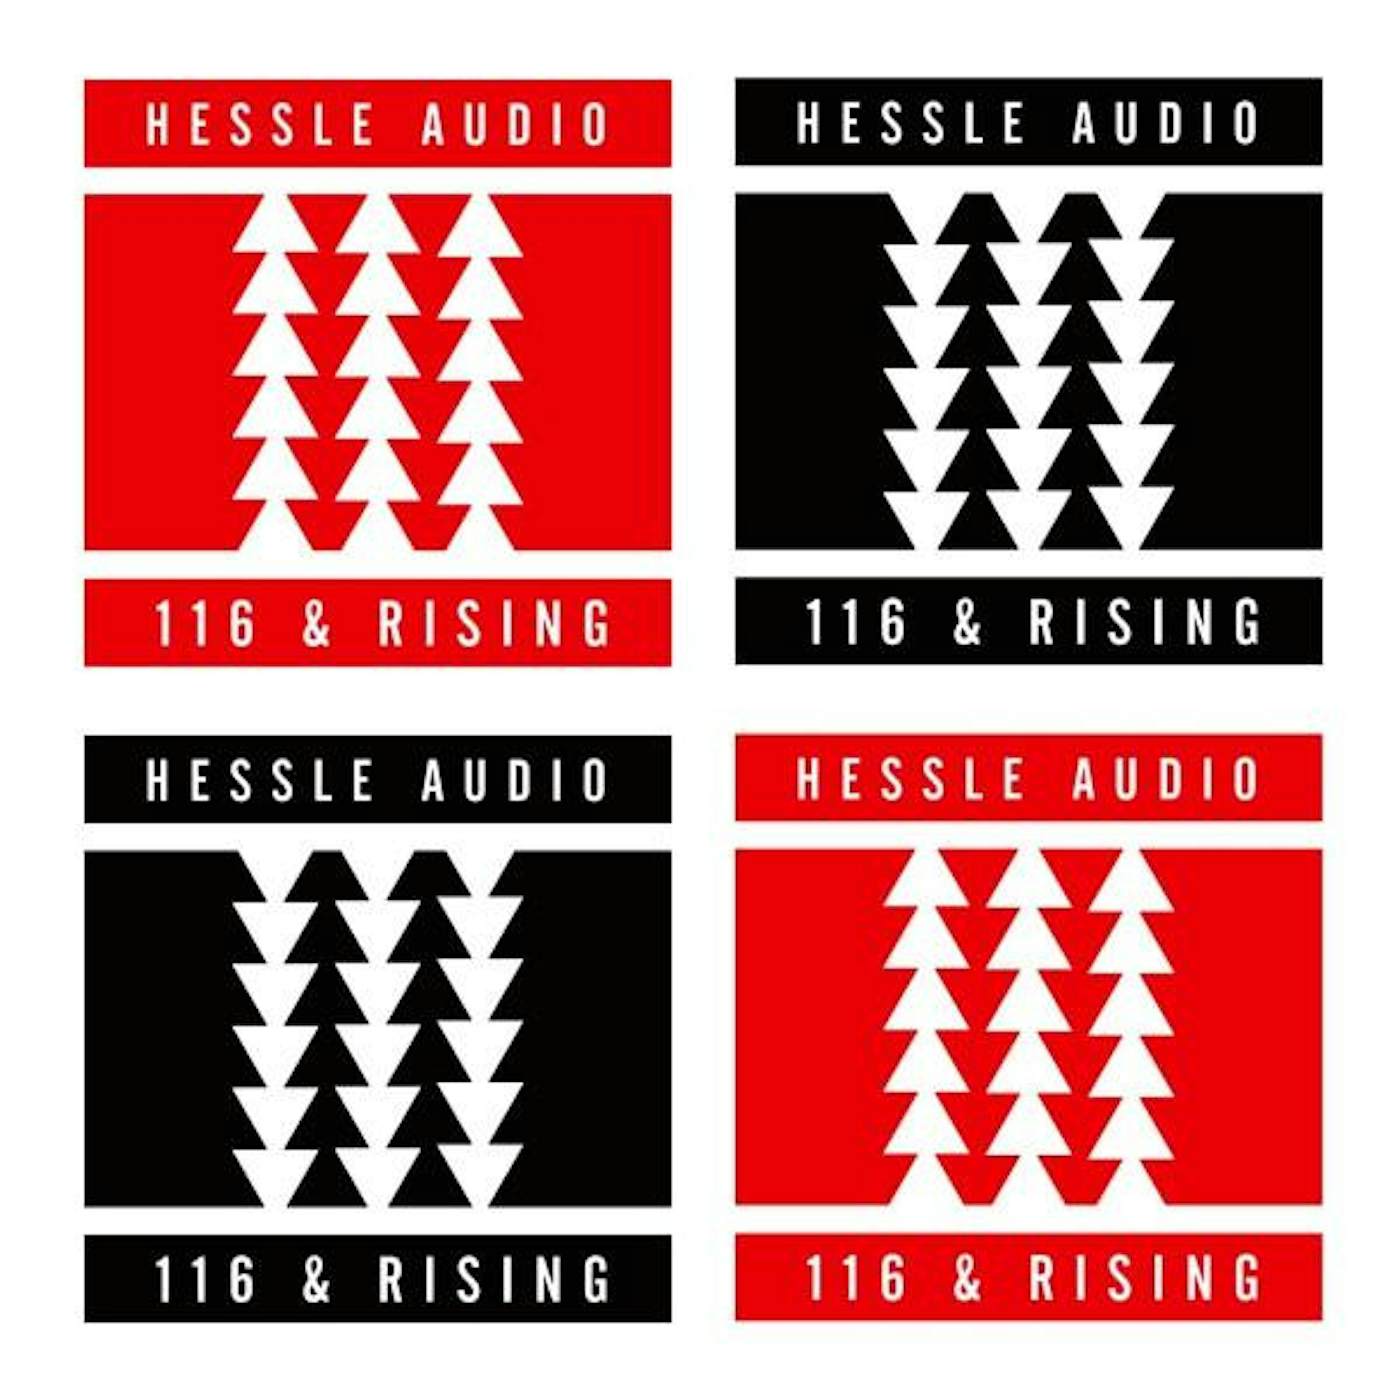 HESSLE AUDIO: 116 & RISING Vinyl Record